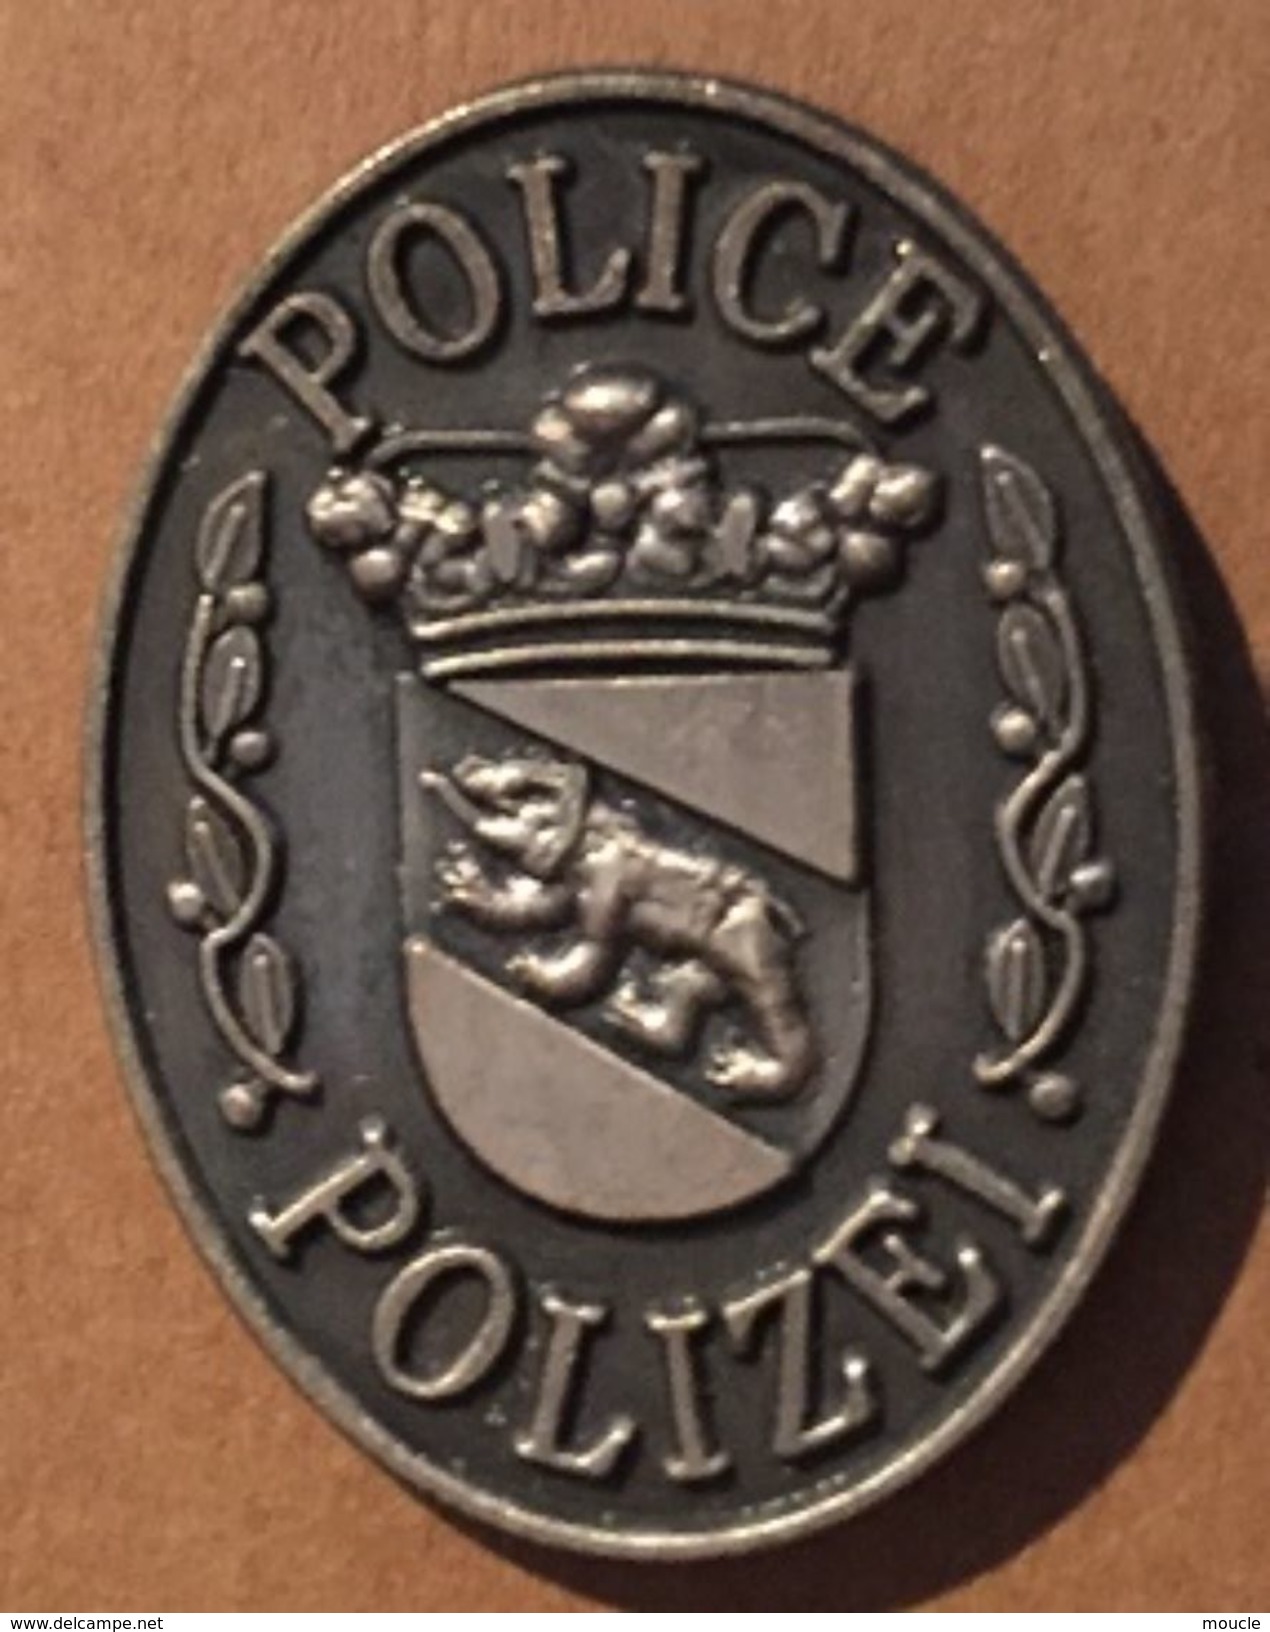 POLICE BERNOISE - BERNER POLIZEI - SUISSE - COP SWISS - SCHWEIZ - BERNE - BERN - OURS - BÄR   -     (19) - Policia